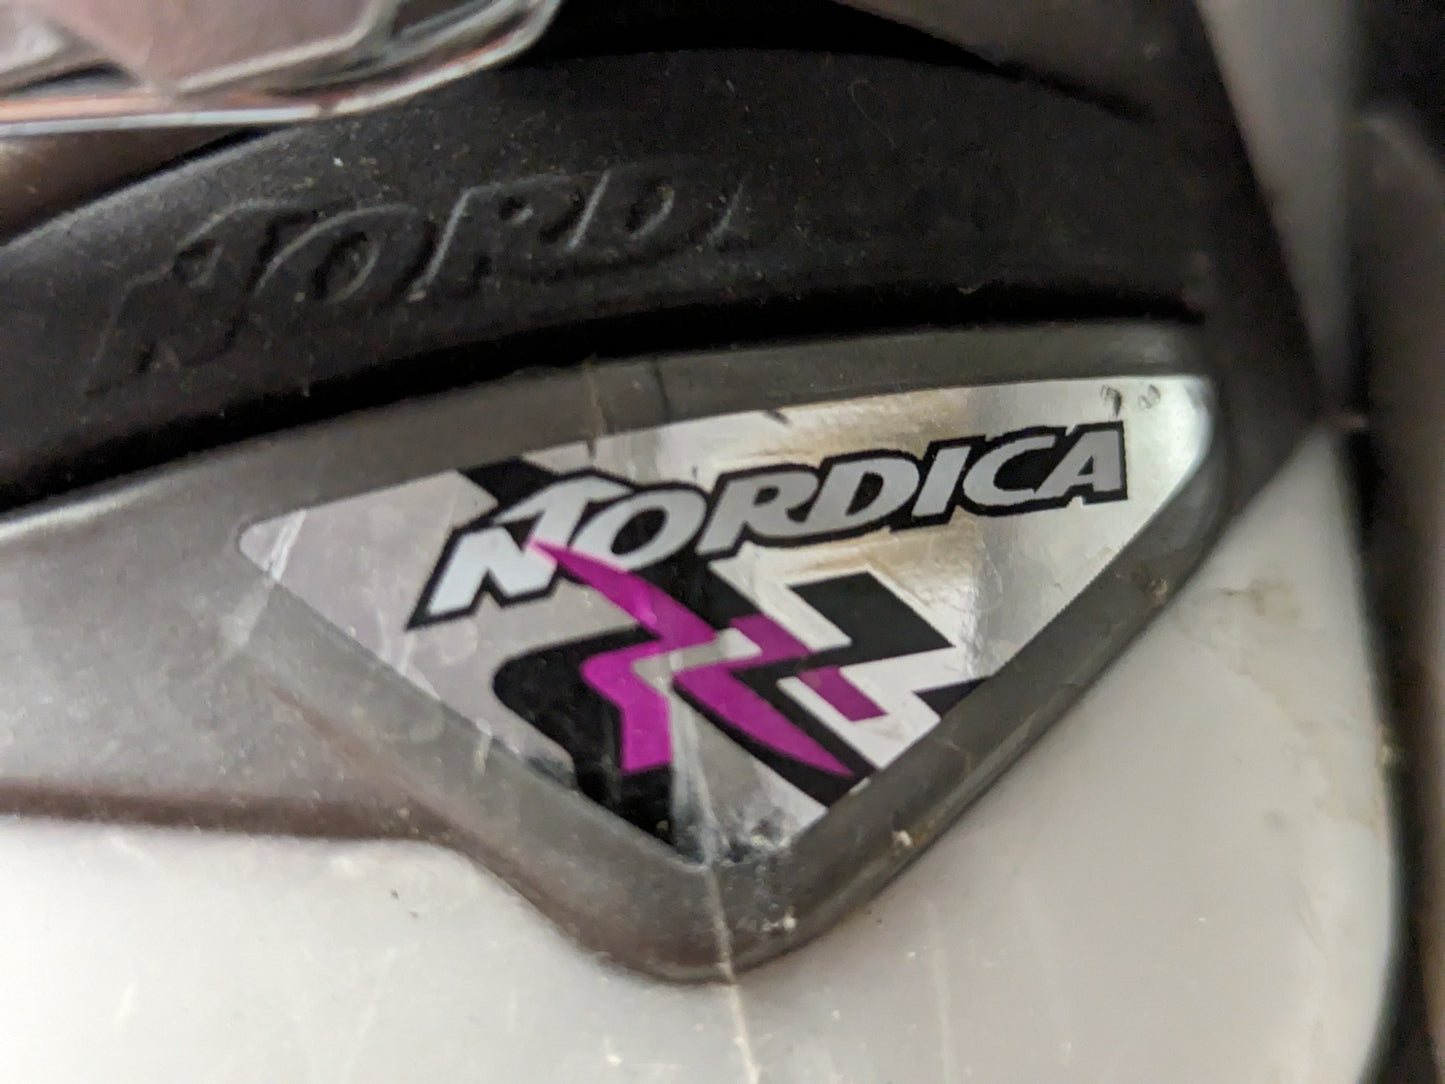 Nordica Hot Rod Women's Ski Boots Size 24.5 Color White Condition Use